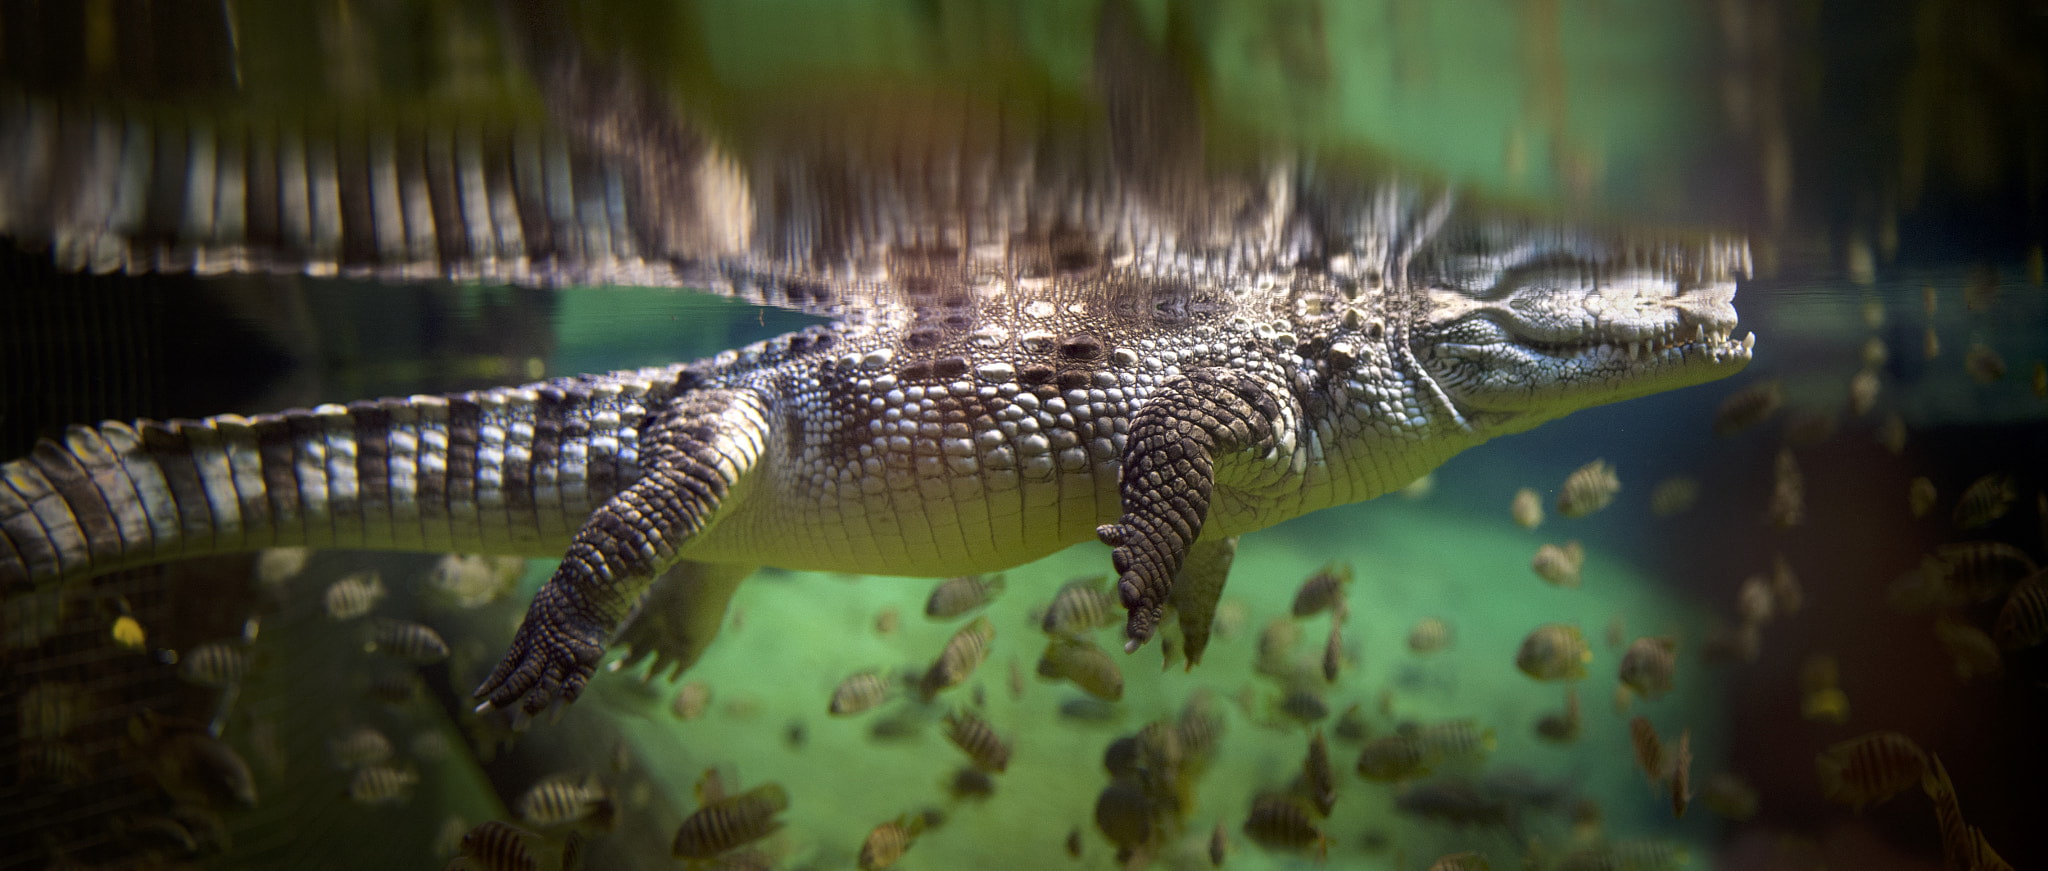 underwater, alligators, animals, fish, crocodile, animal themes